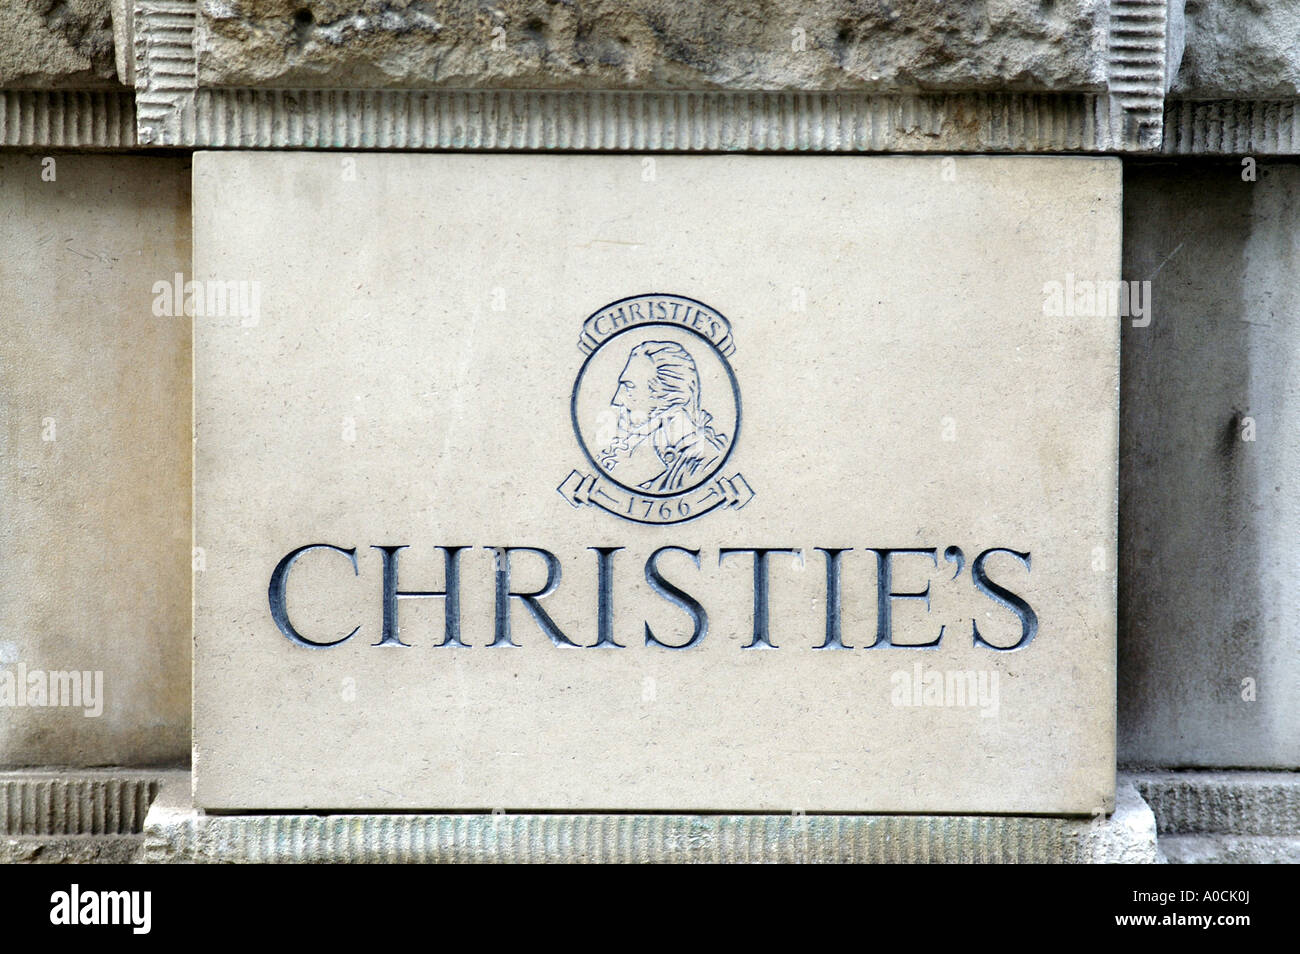 Christie's banditori King Street London Foto Stock